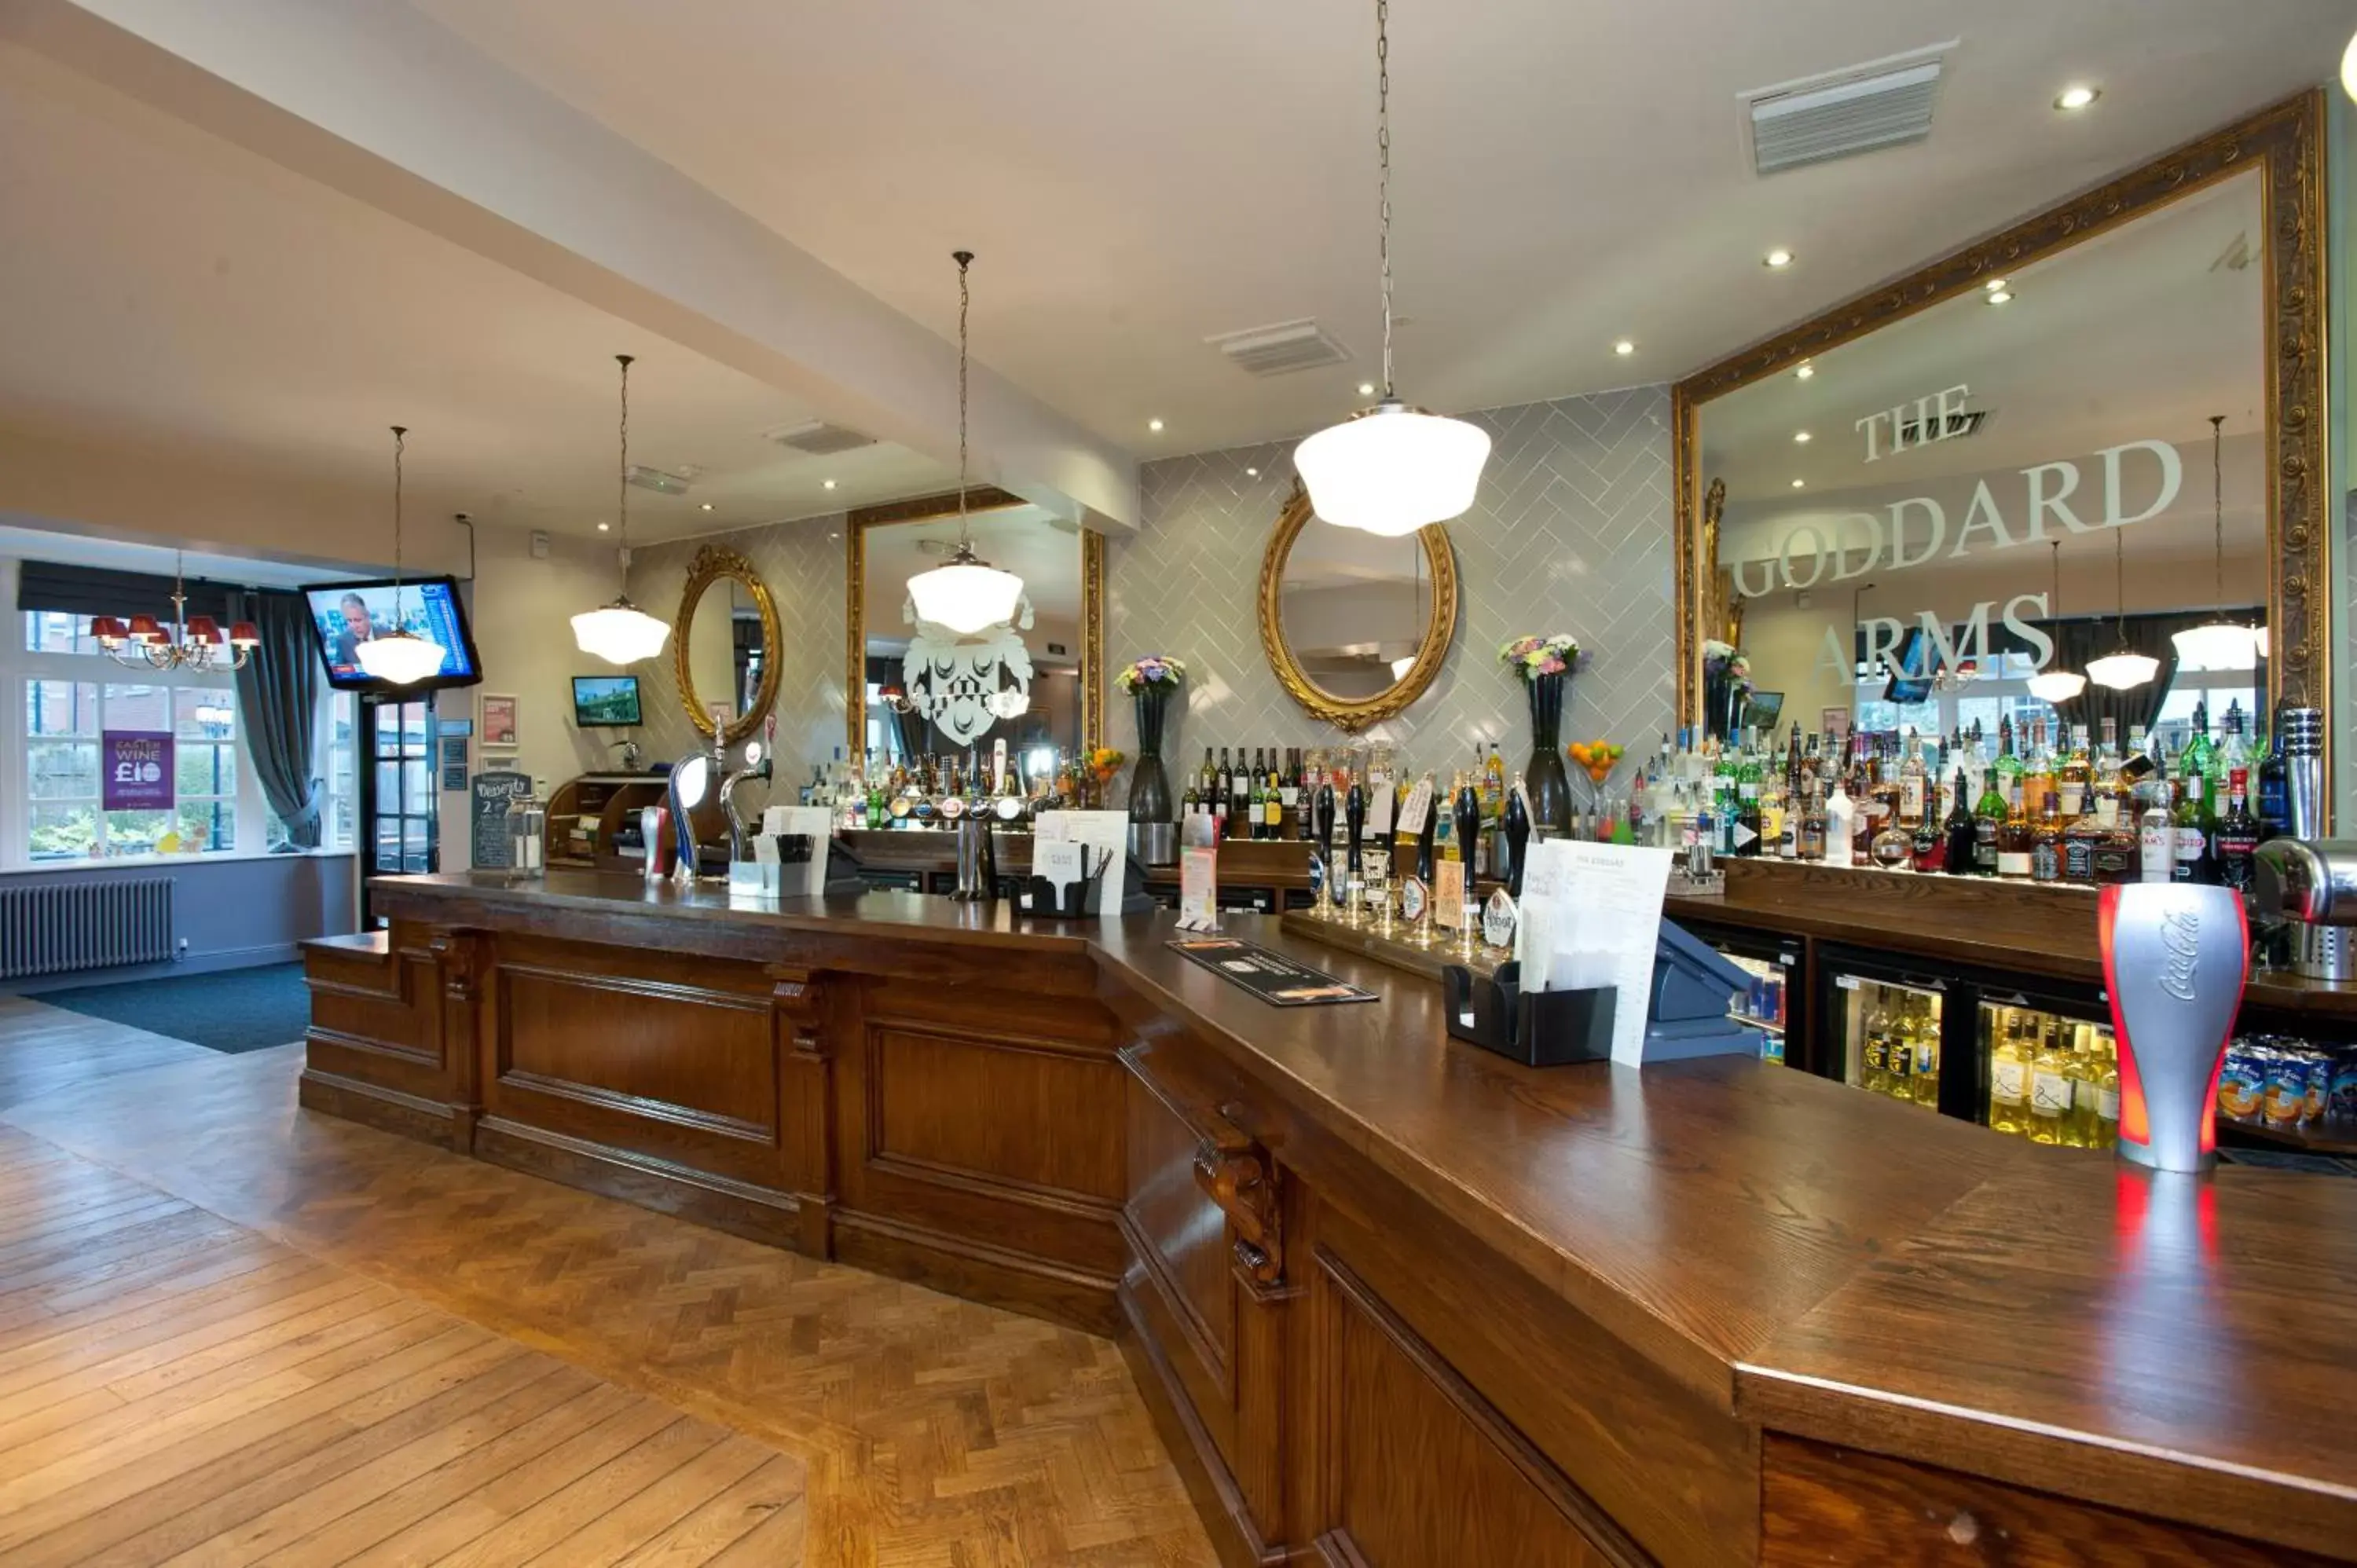 Lounge or bar, Lounge/Bar in The Goddard Arms